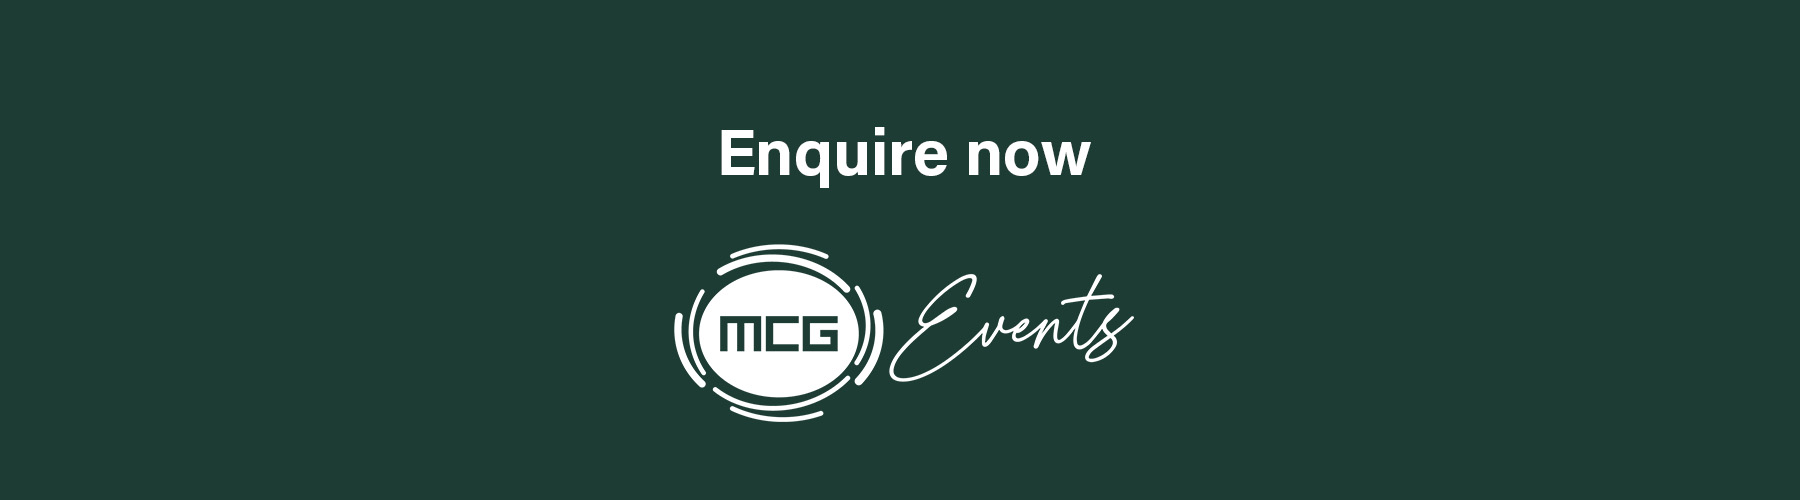 MCG Events enquire now